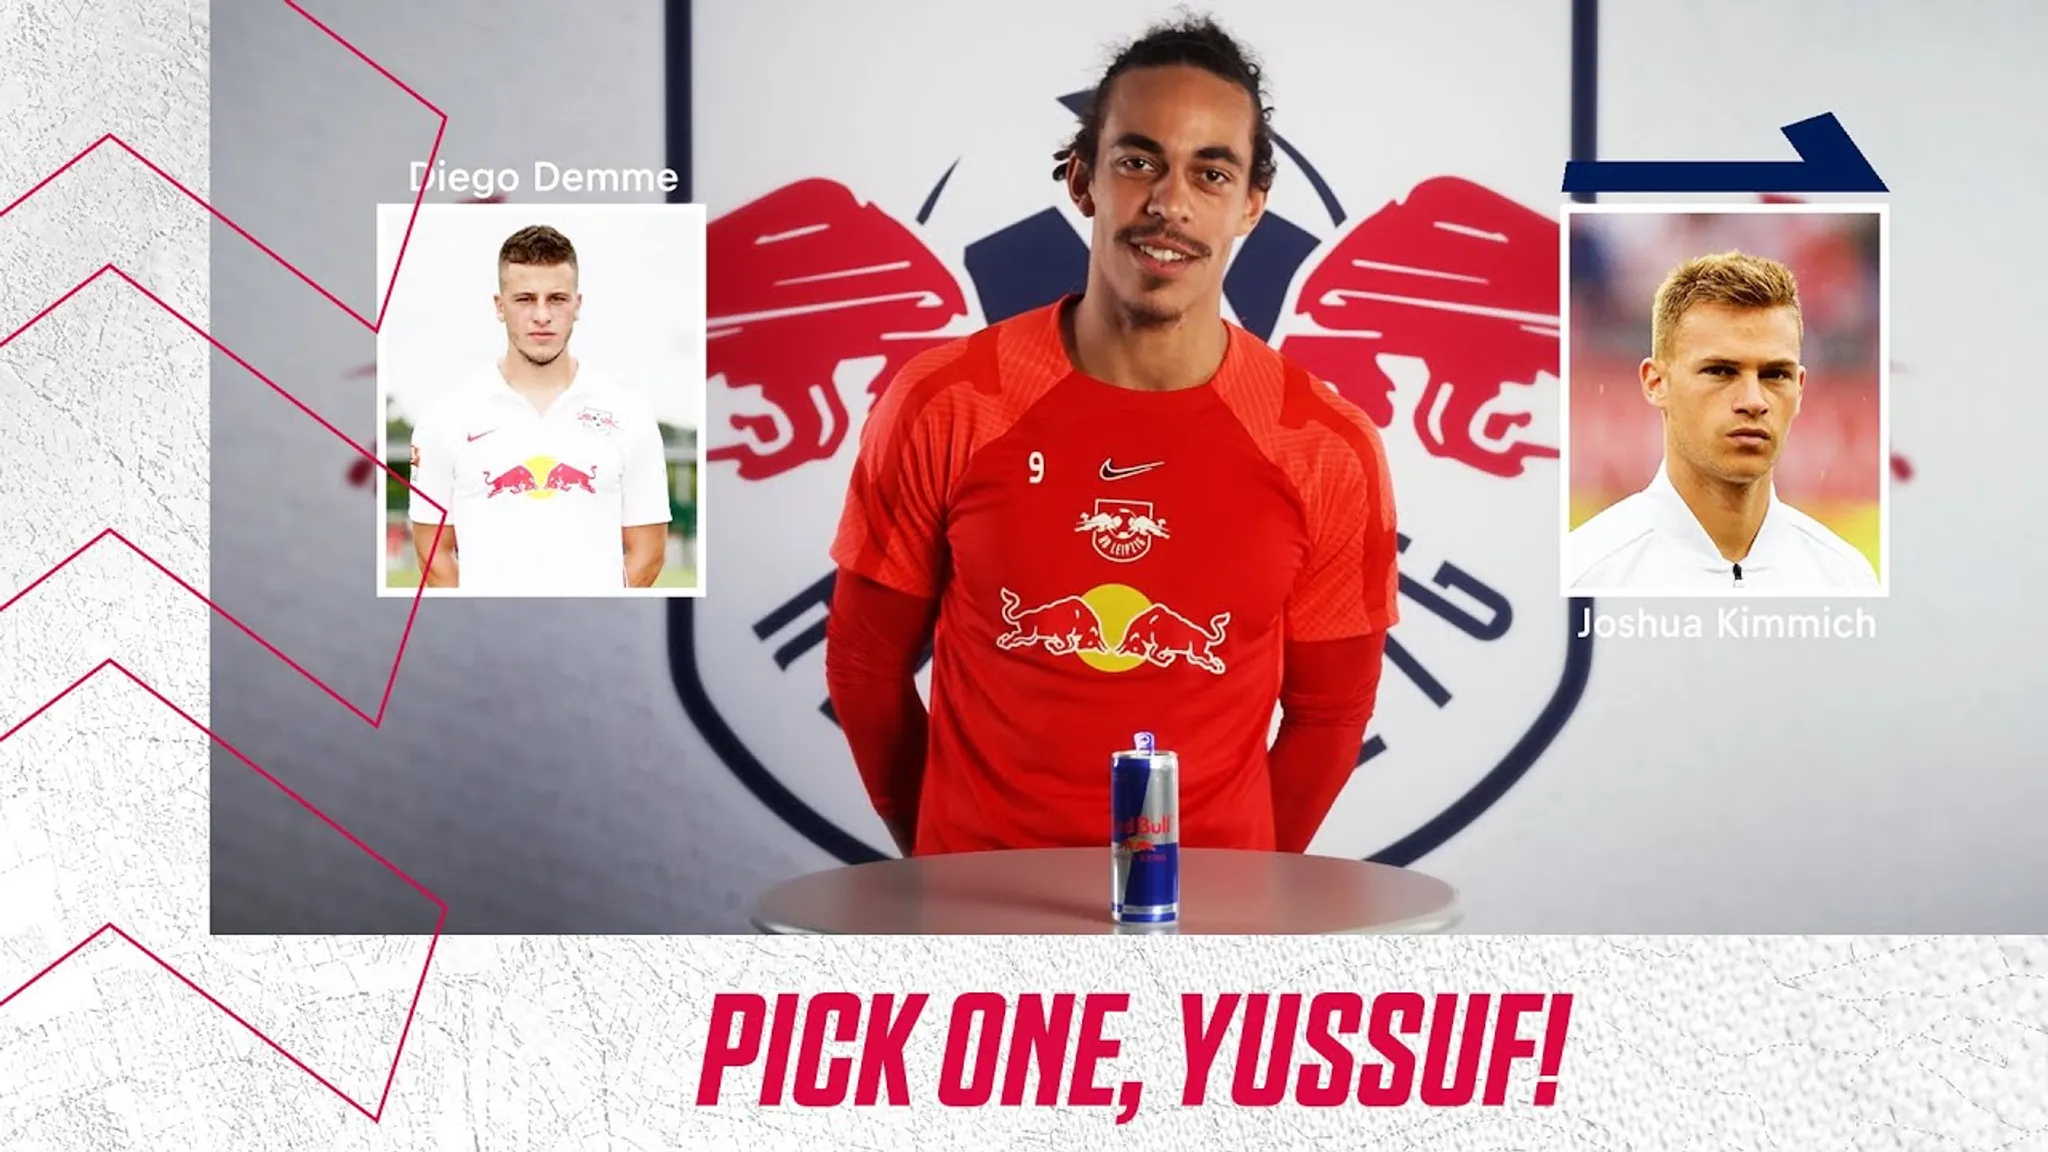 Yussuf Poulsen von RB Leipzig in Folge 4 des YouTube-Formats "Pick One".